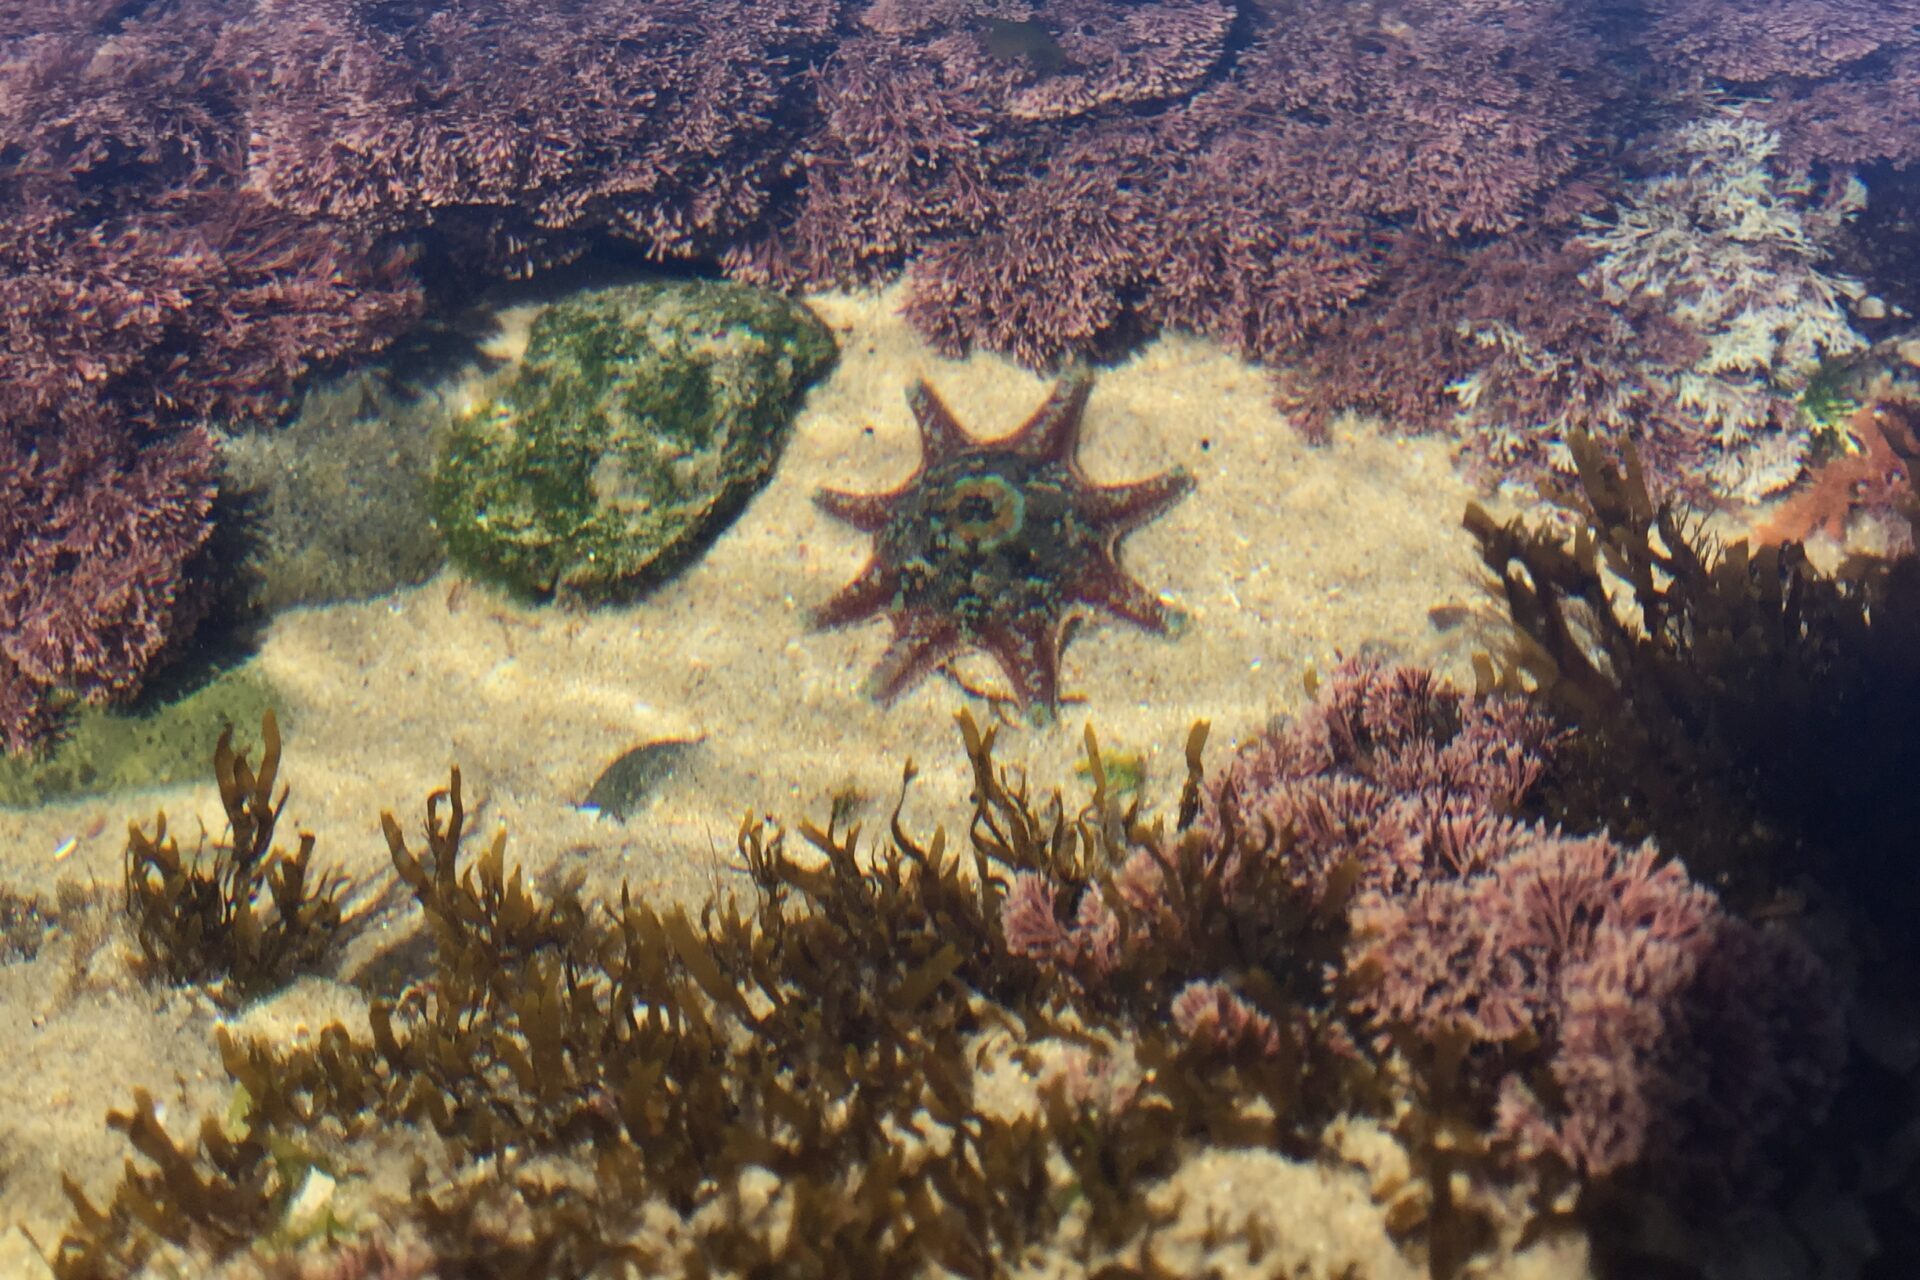 Starfish on rocky shoreline